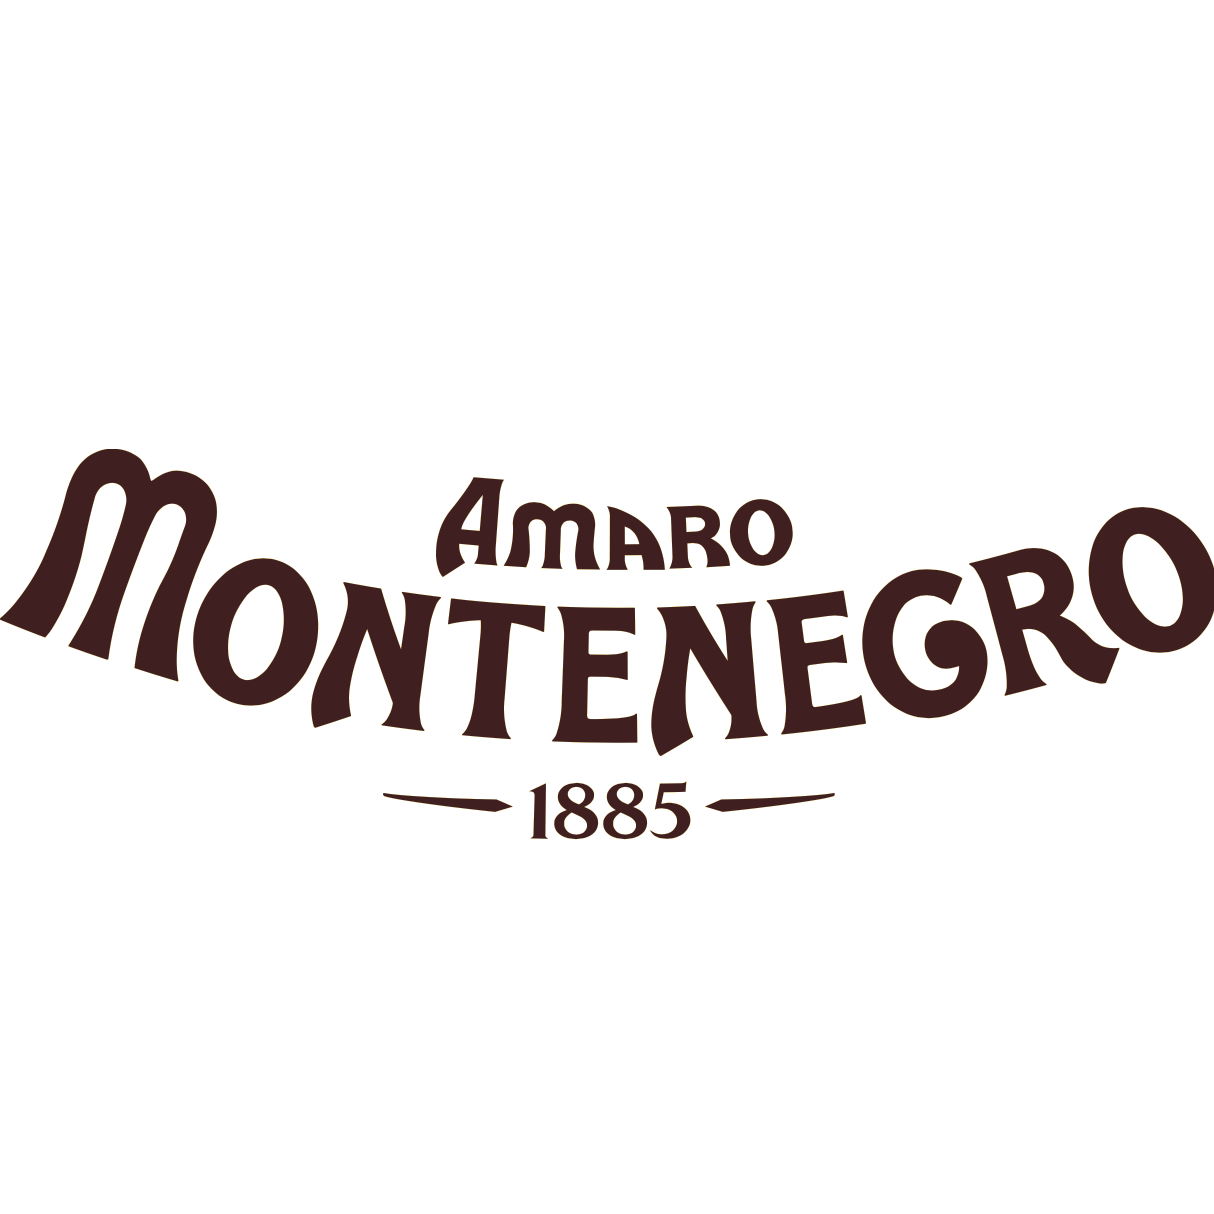 AmaroMontenegro.png